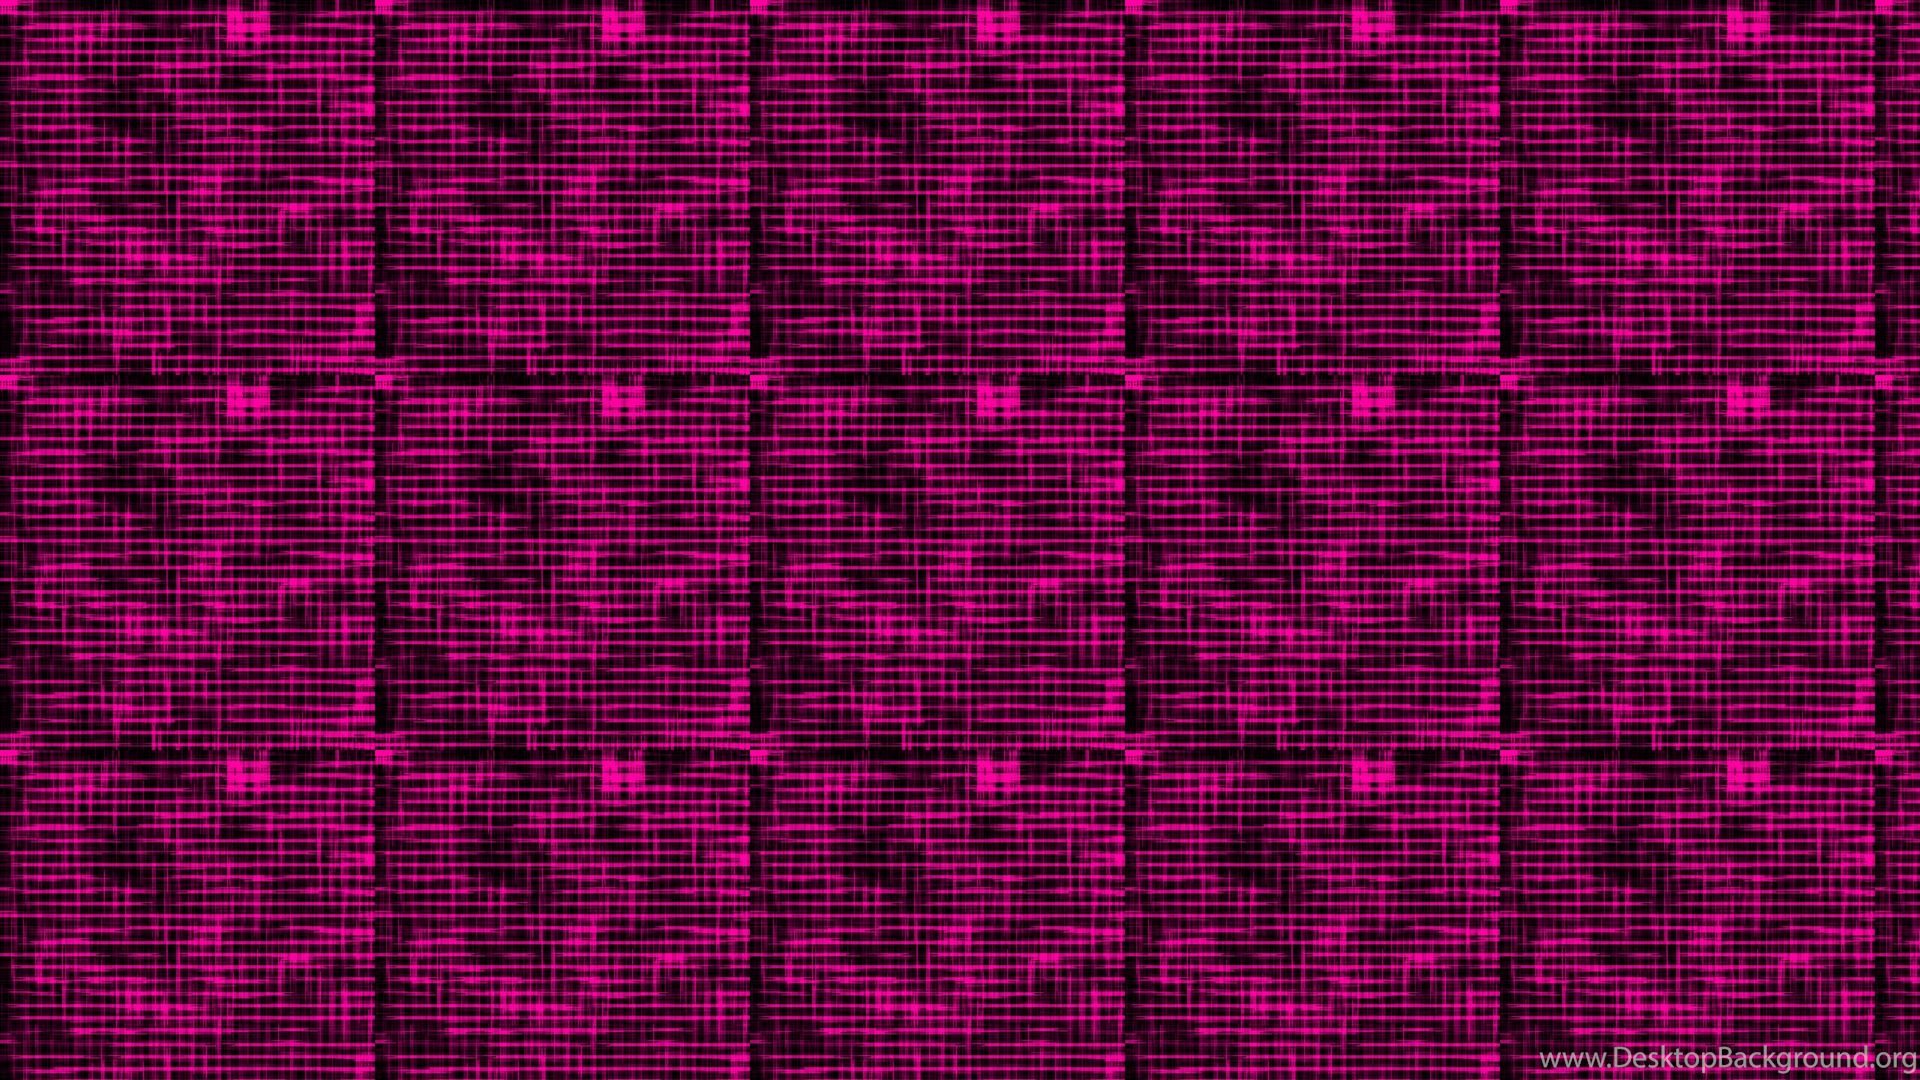 Hot Pink Grunge Desktop Wallpaper Desktop Background